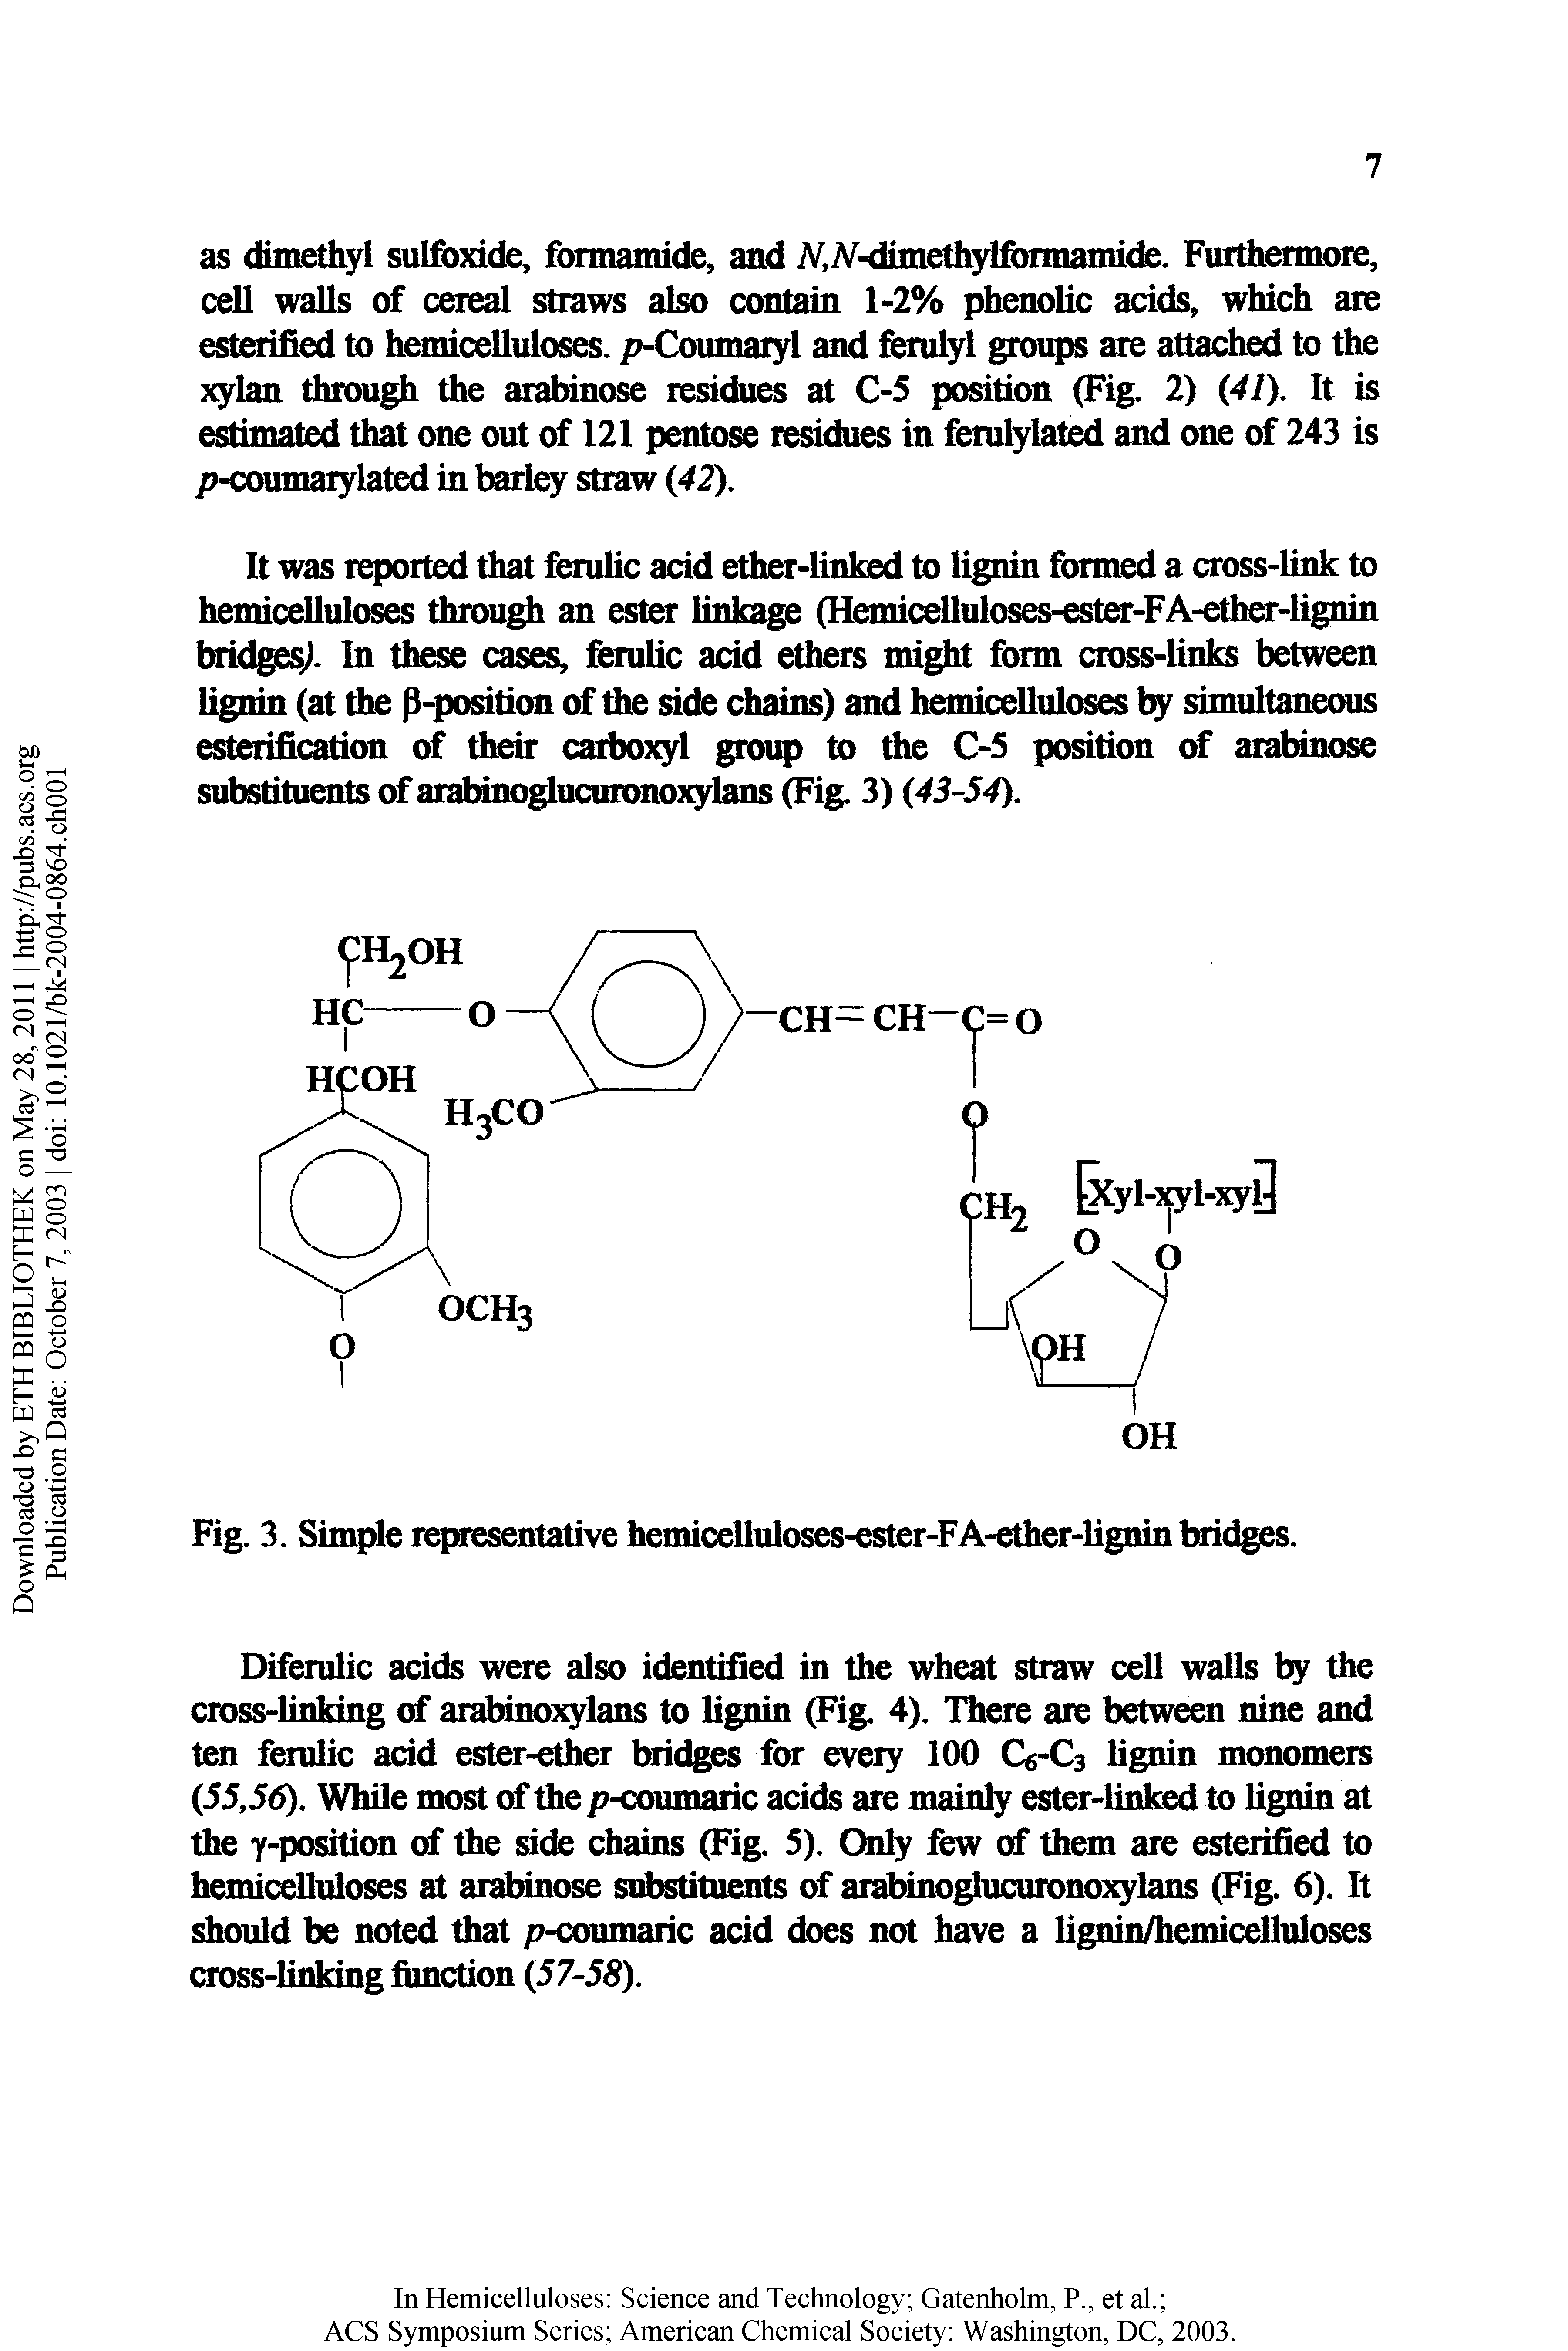 Fig. 3. Simide rquesentative hemicelluloses-ester-FA-ether-lignin tmdges.